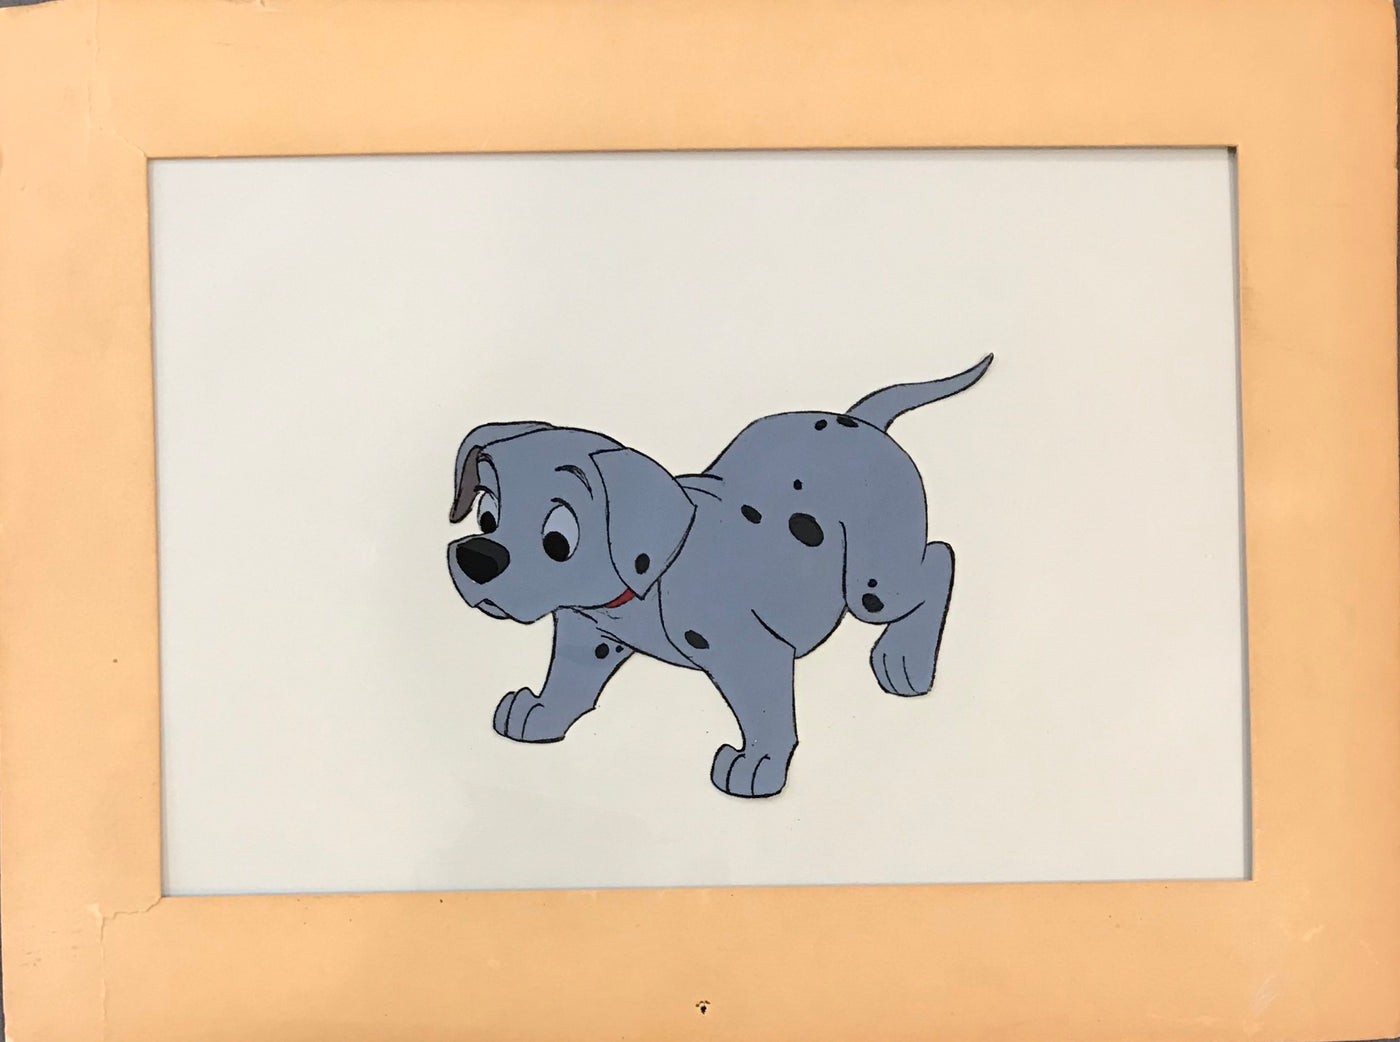 Original Walt Disney Production Cel from 101 Dalmatians featuring puppy (Pepper or Spot)